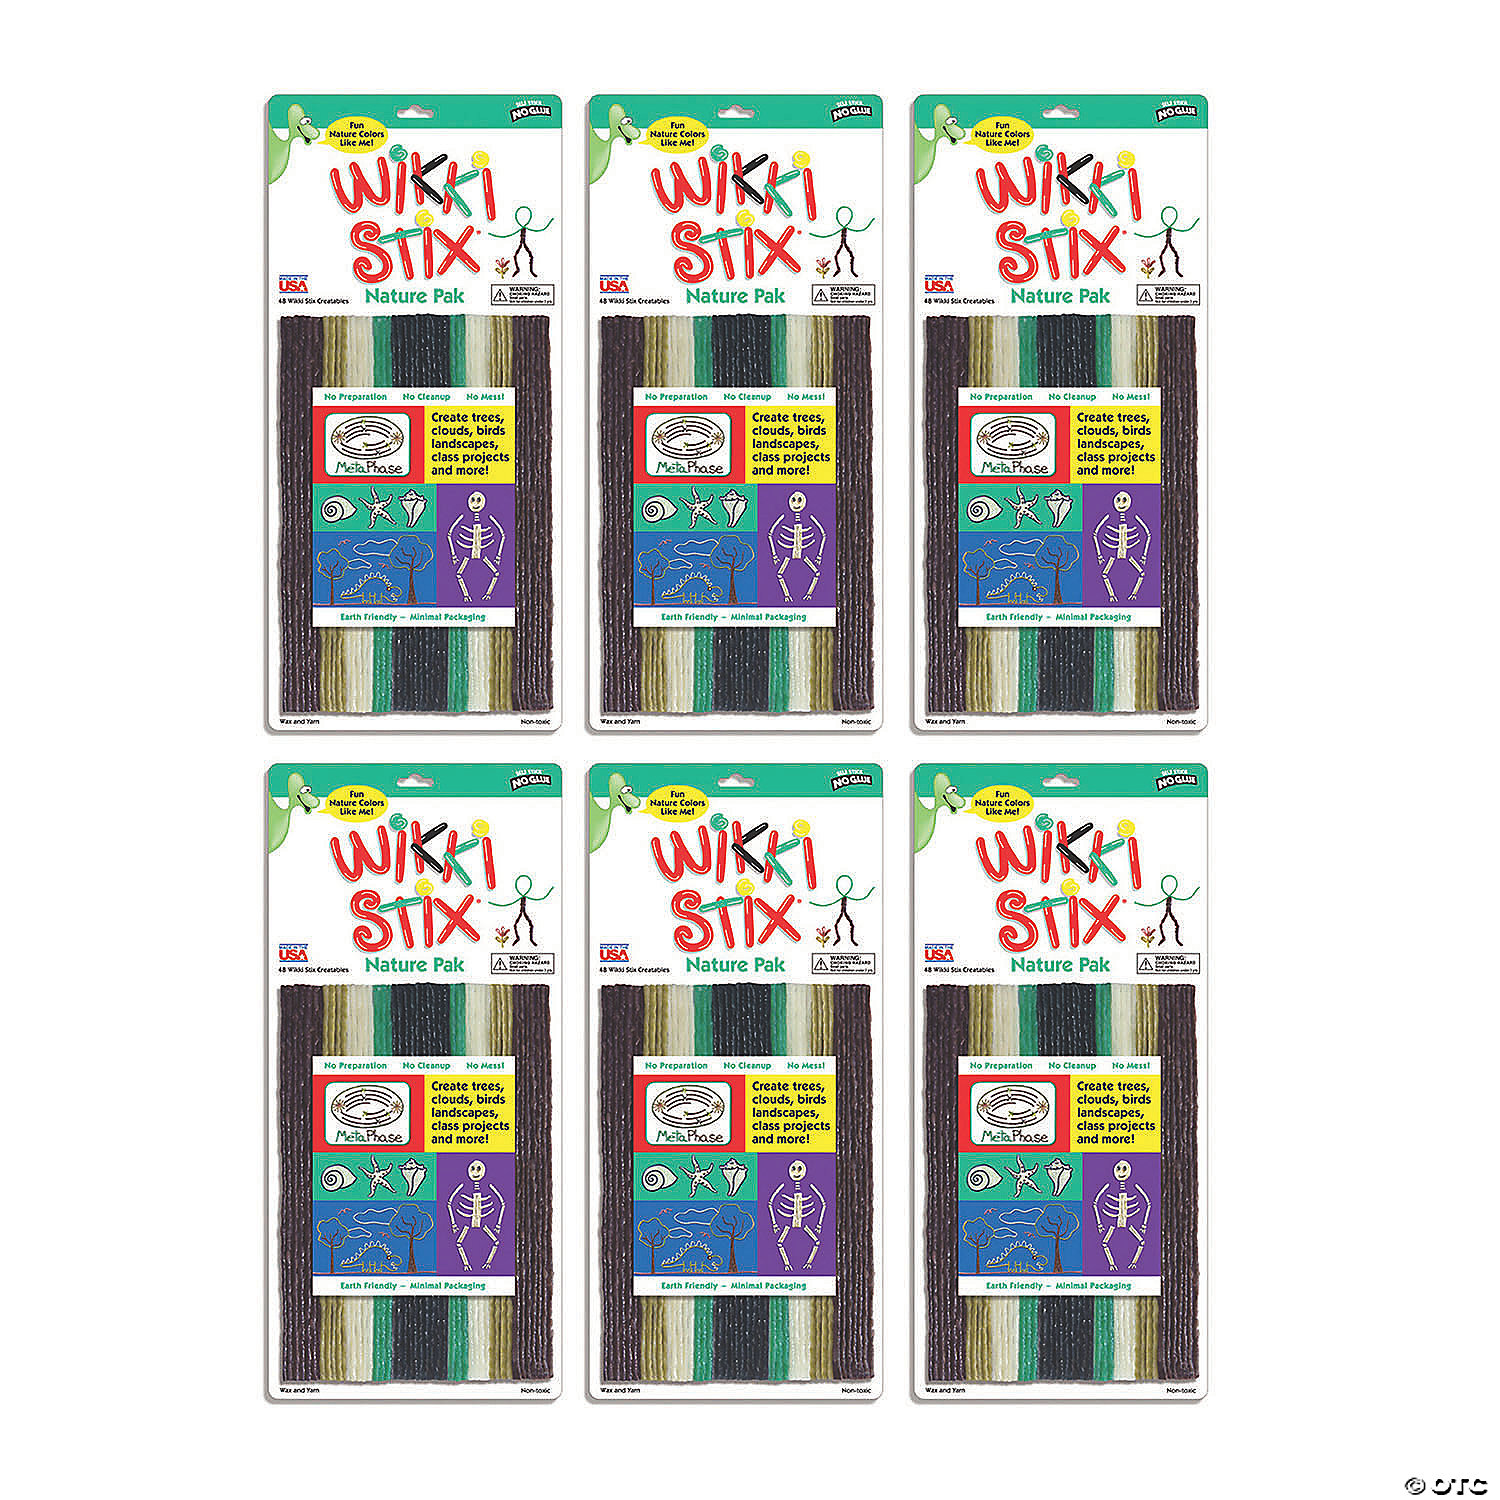 Wikki Stix Original Packages